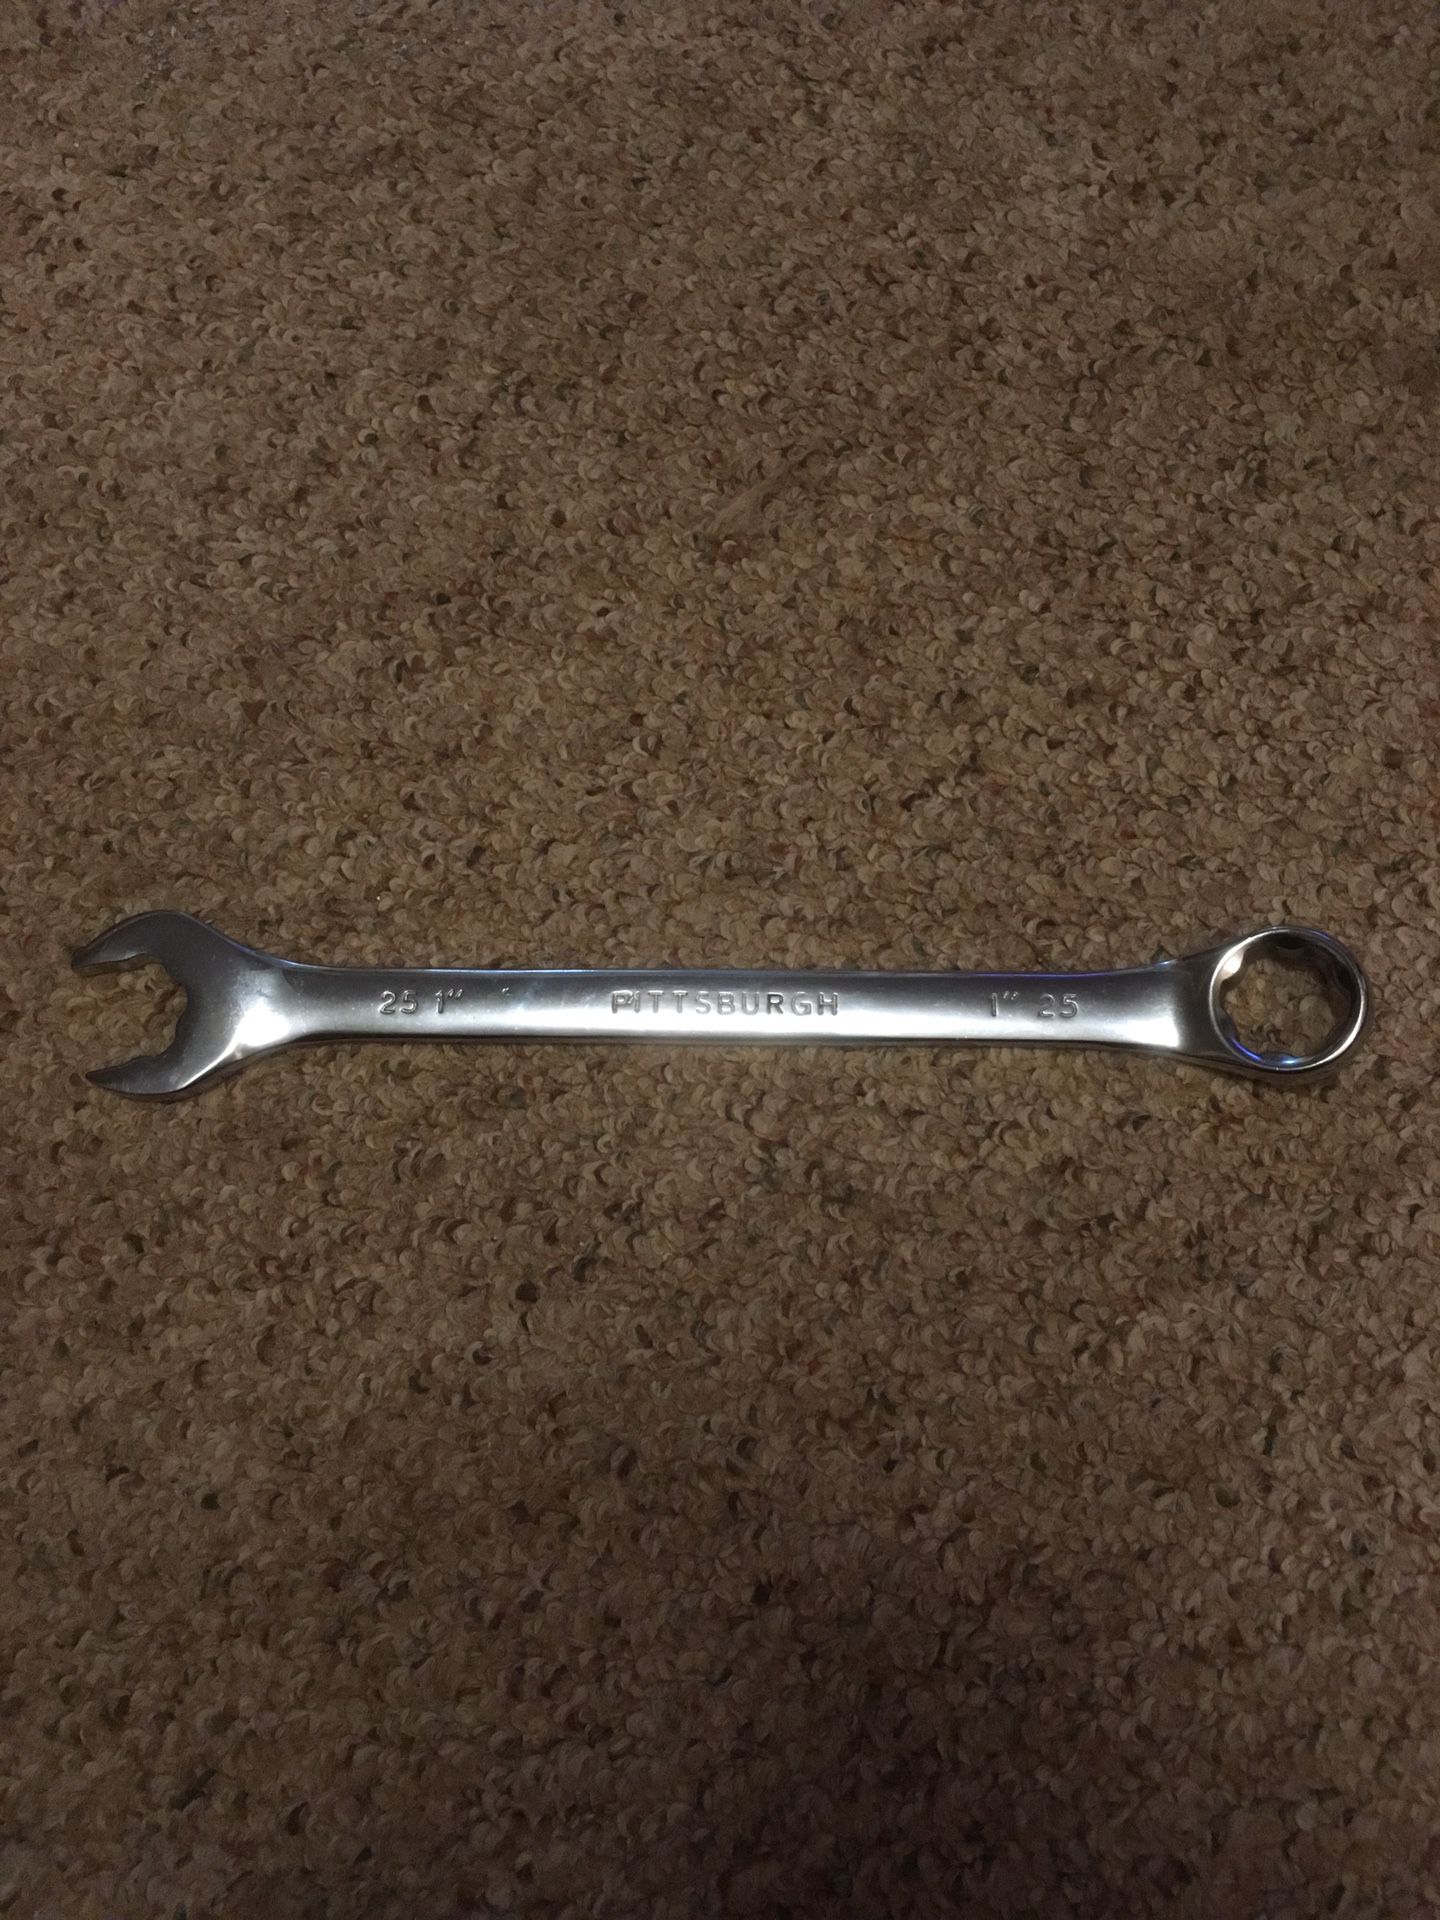 1 inch full polish wrench